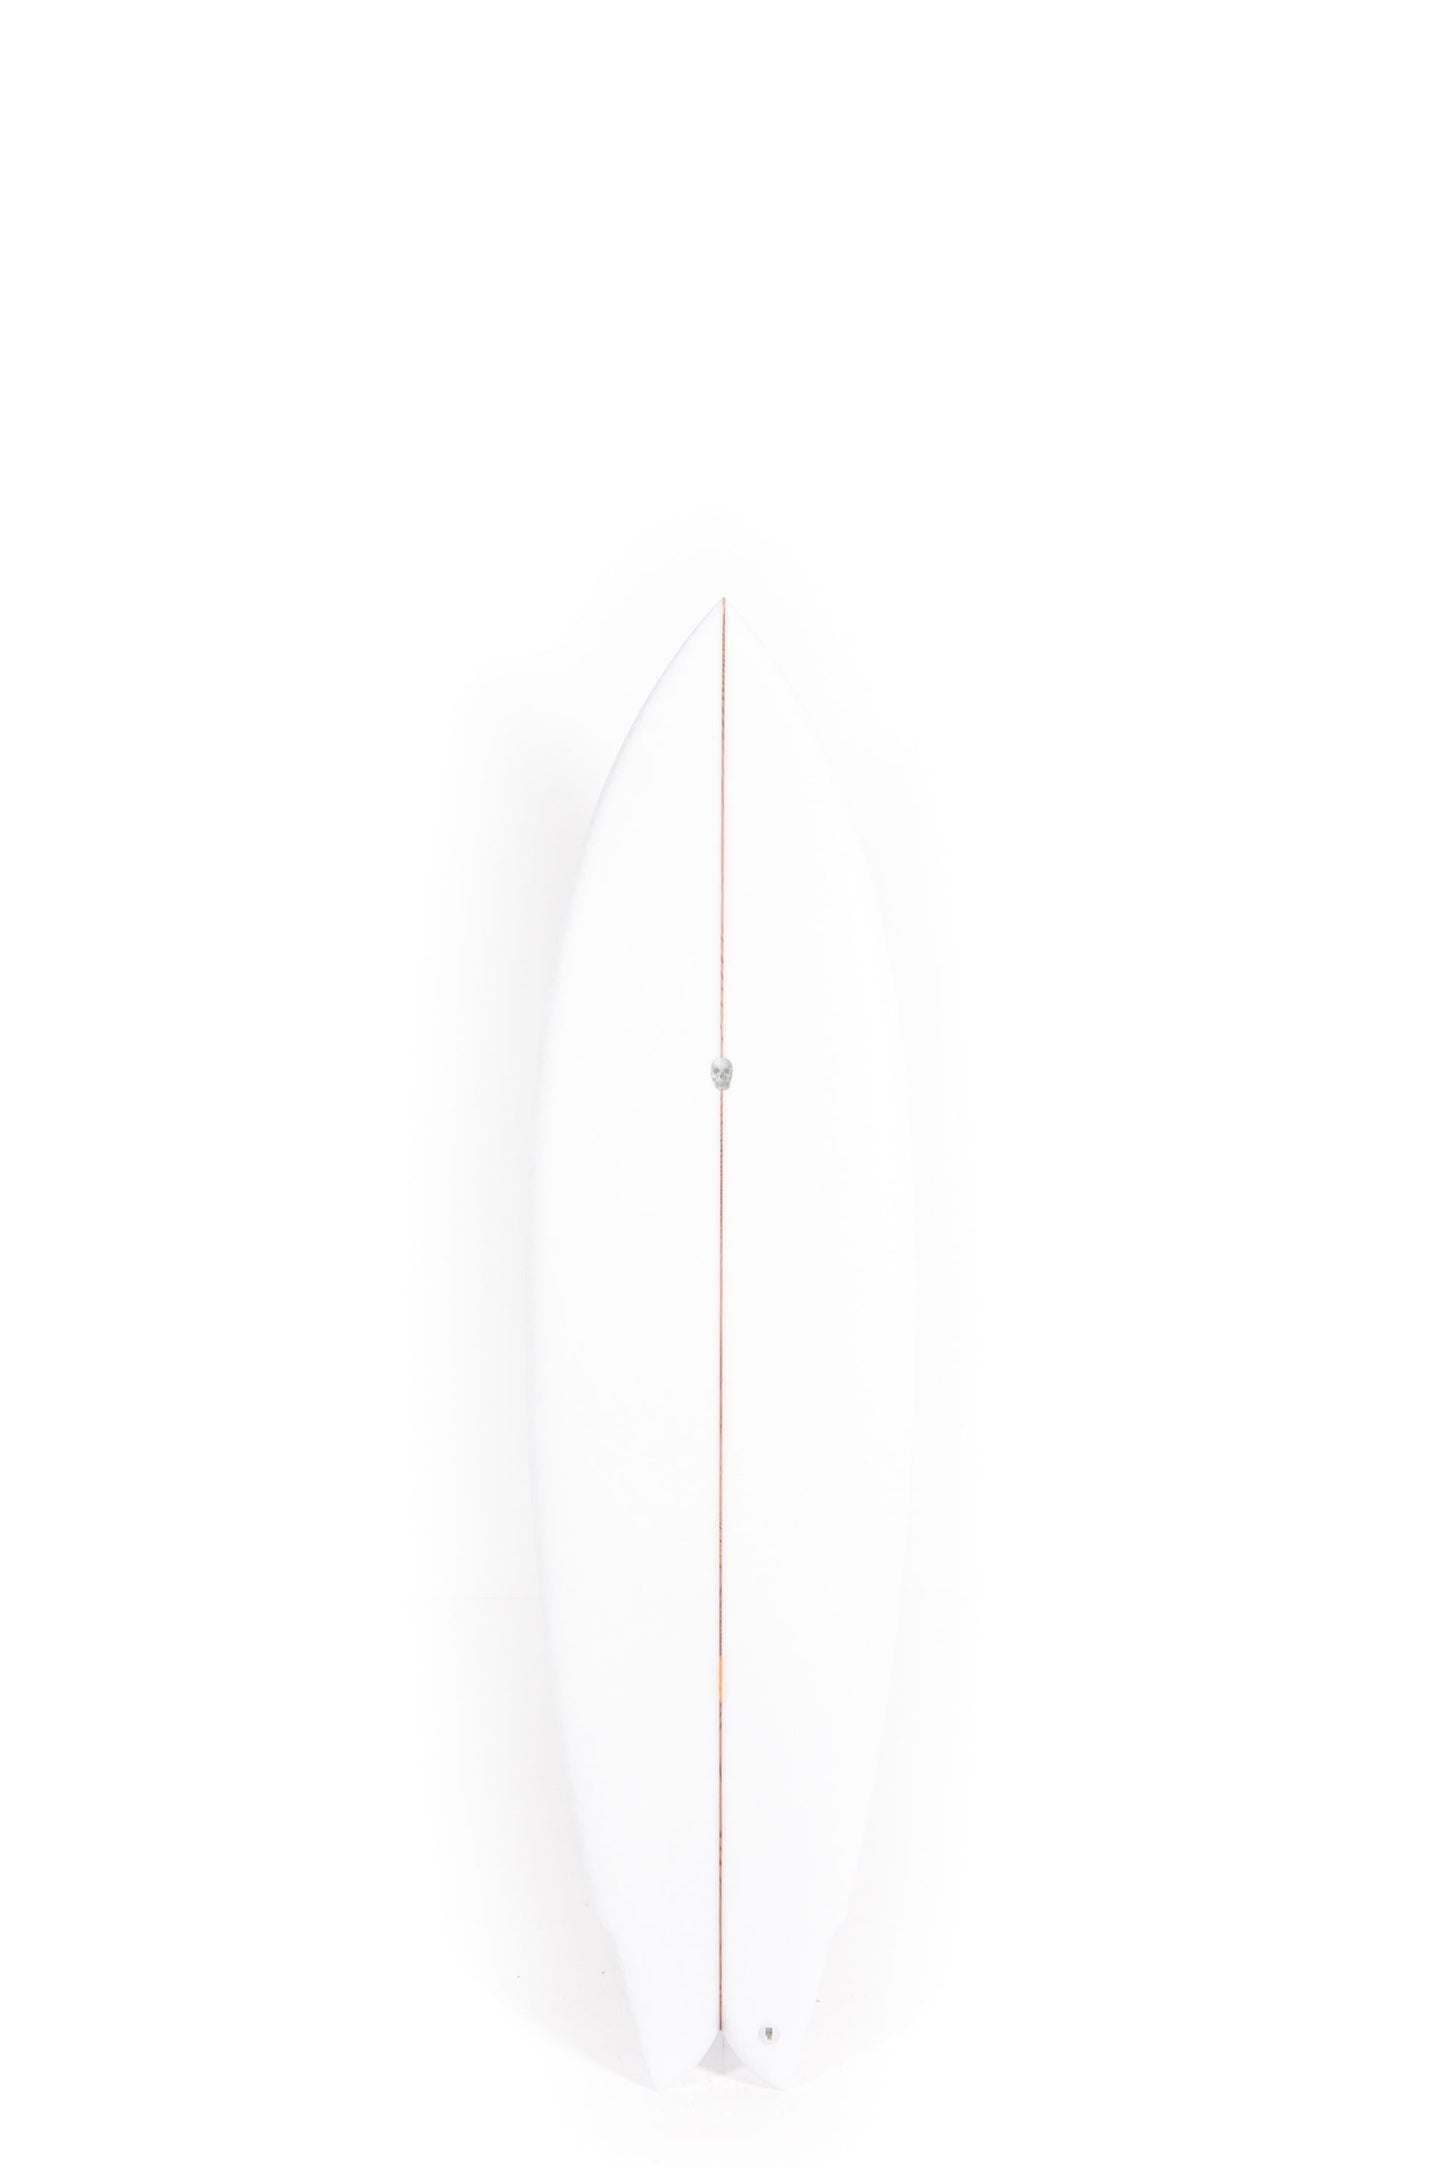 Pukas Surf Shop - Christenson Surfboard  - WOLVERINE by Chris Christenson - 6’6 x 20 3/4 x 2 5/8 x 39,42L - CX05800